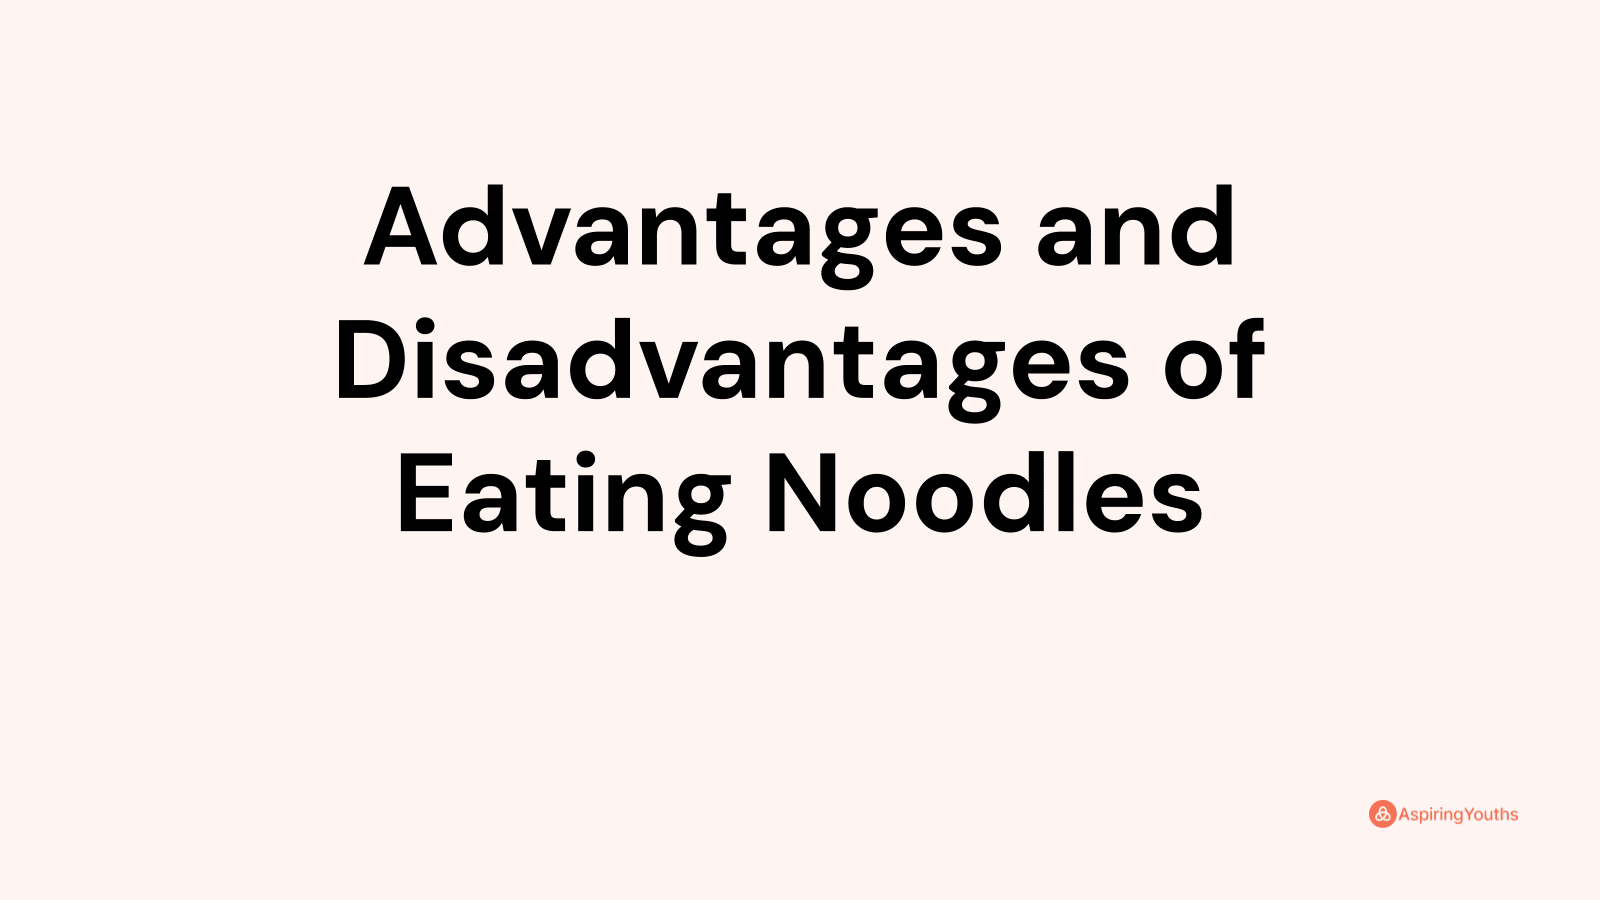 Advantages and disadvantages of Eating Noodles